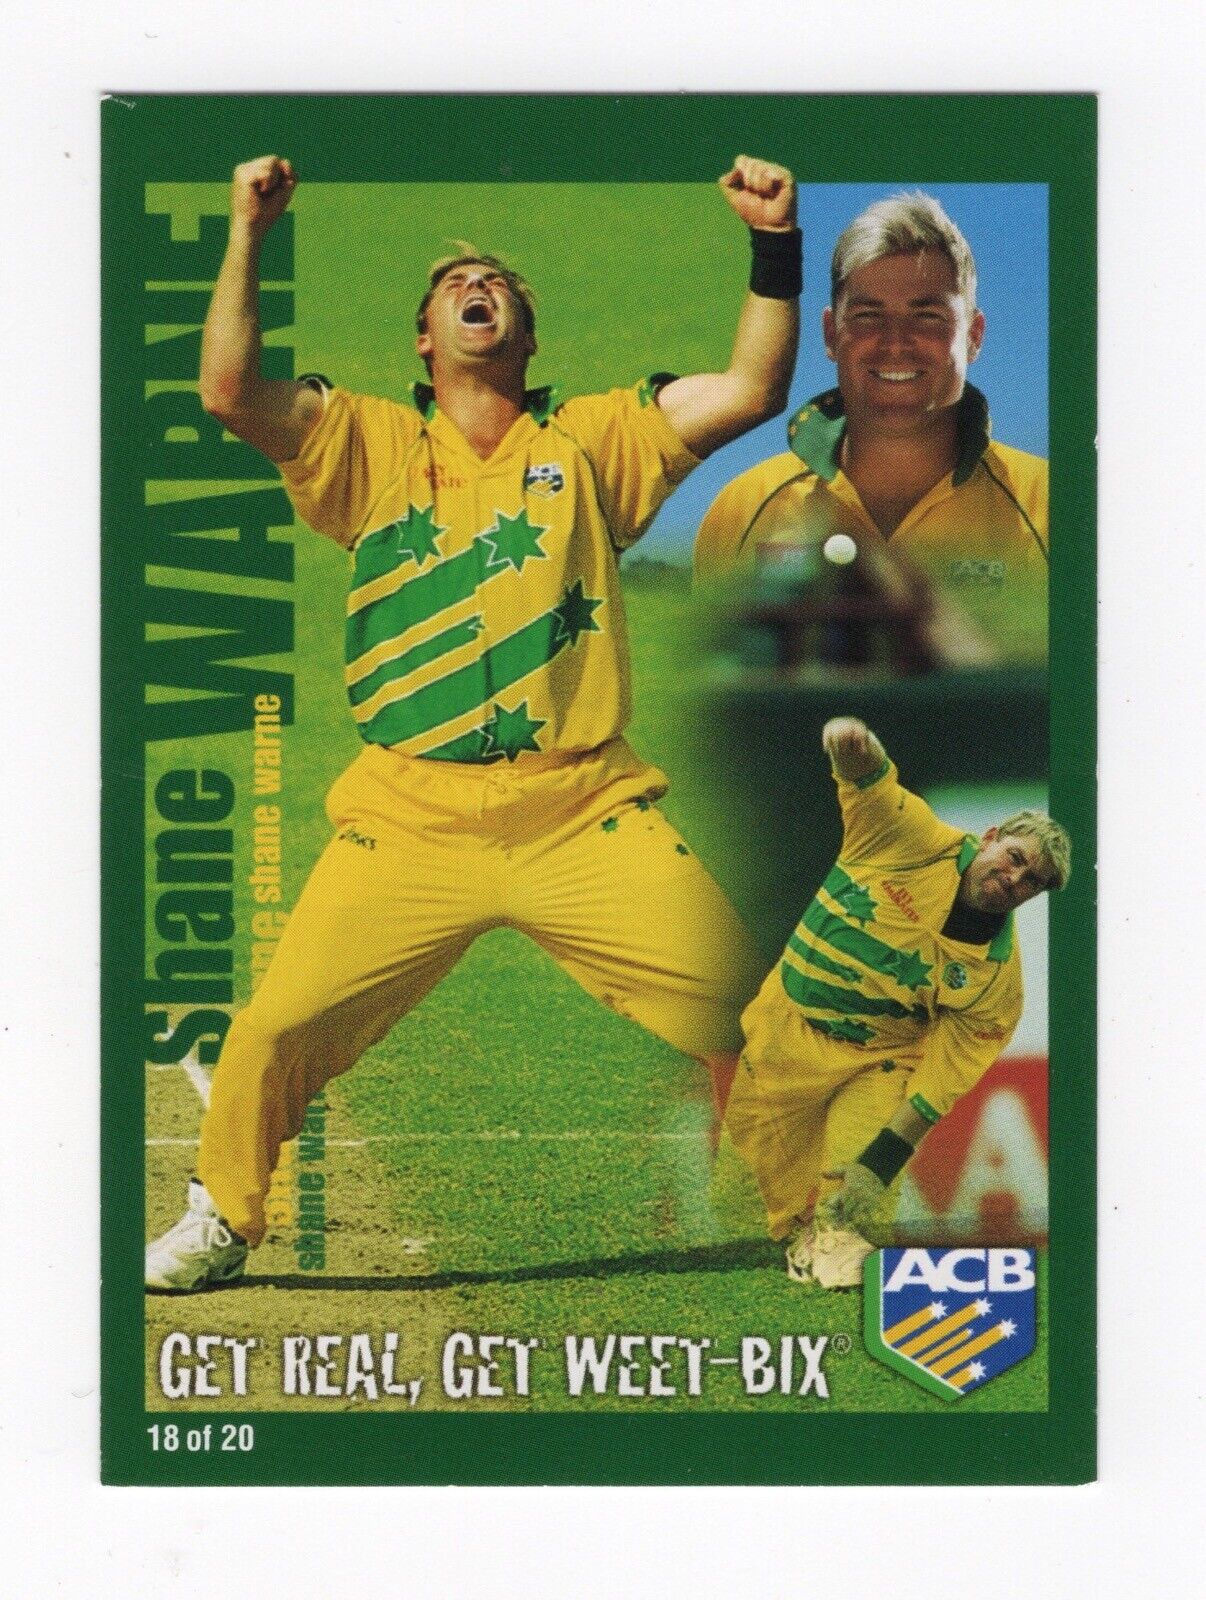 Sanitarium Australia - Cricket 2000 - Get Real, Get Weet-bix Shane Warne